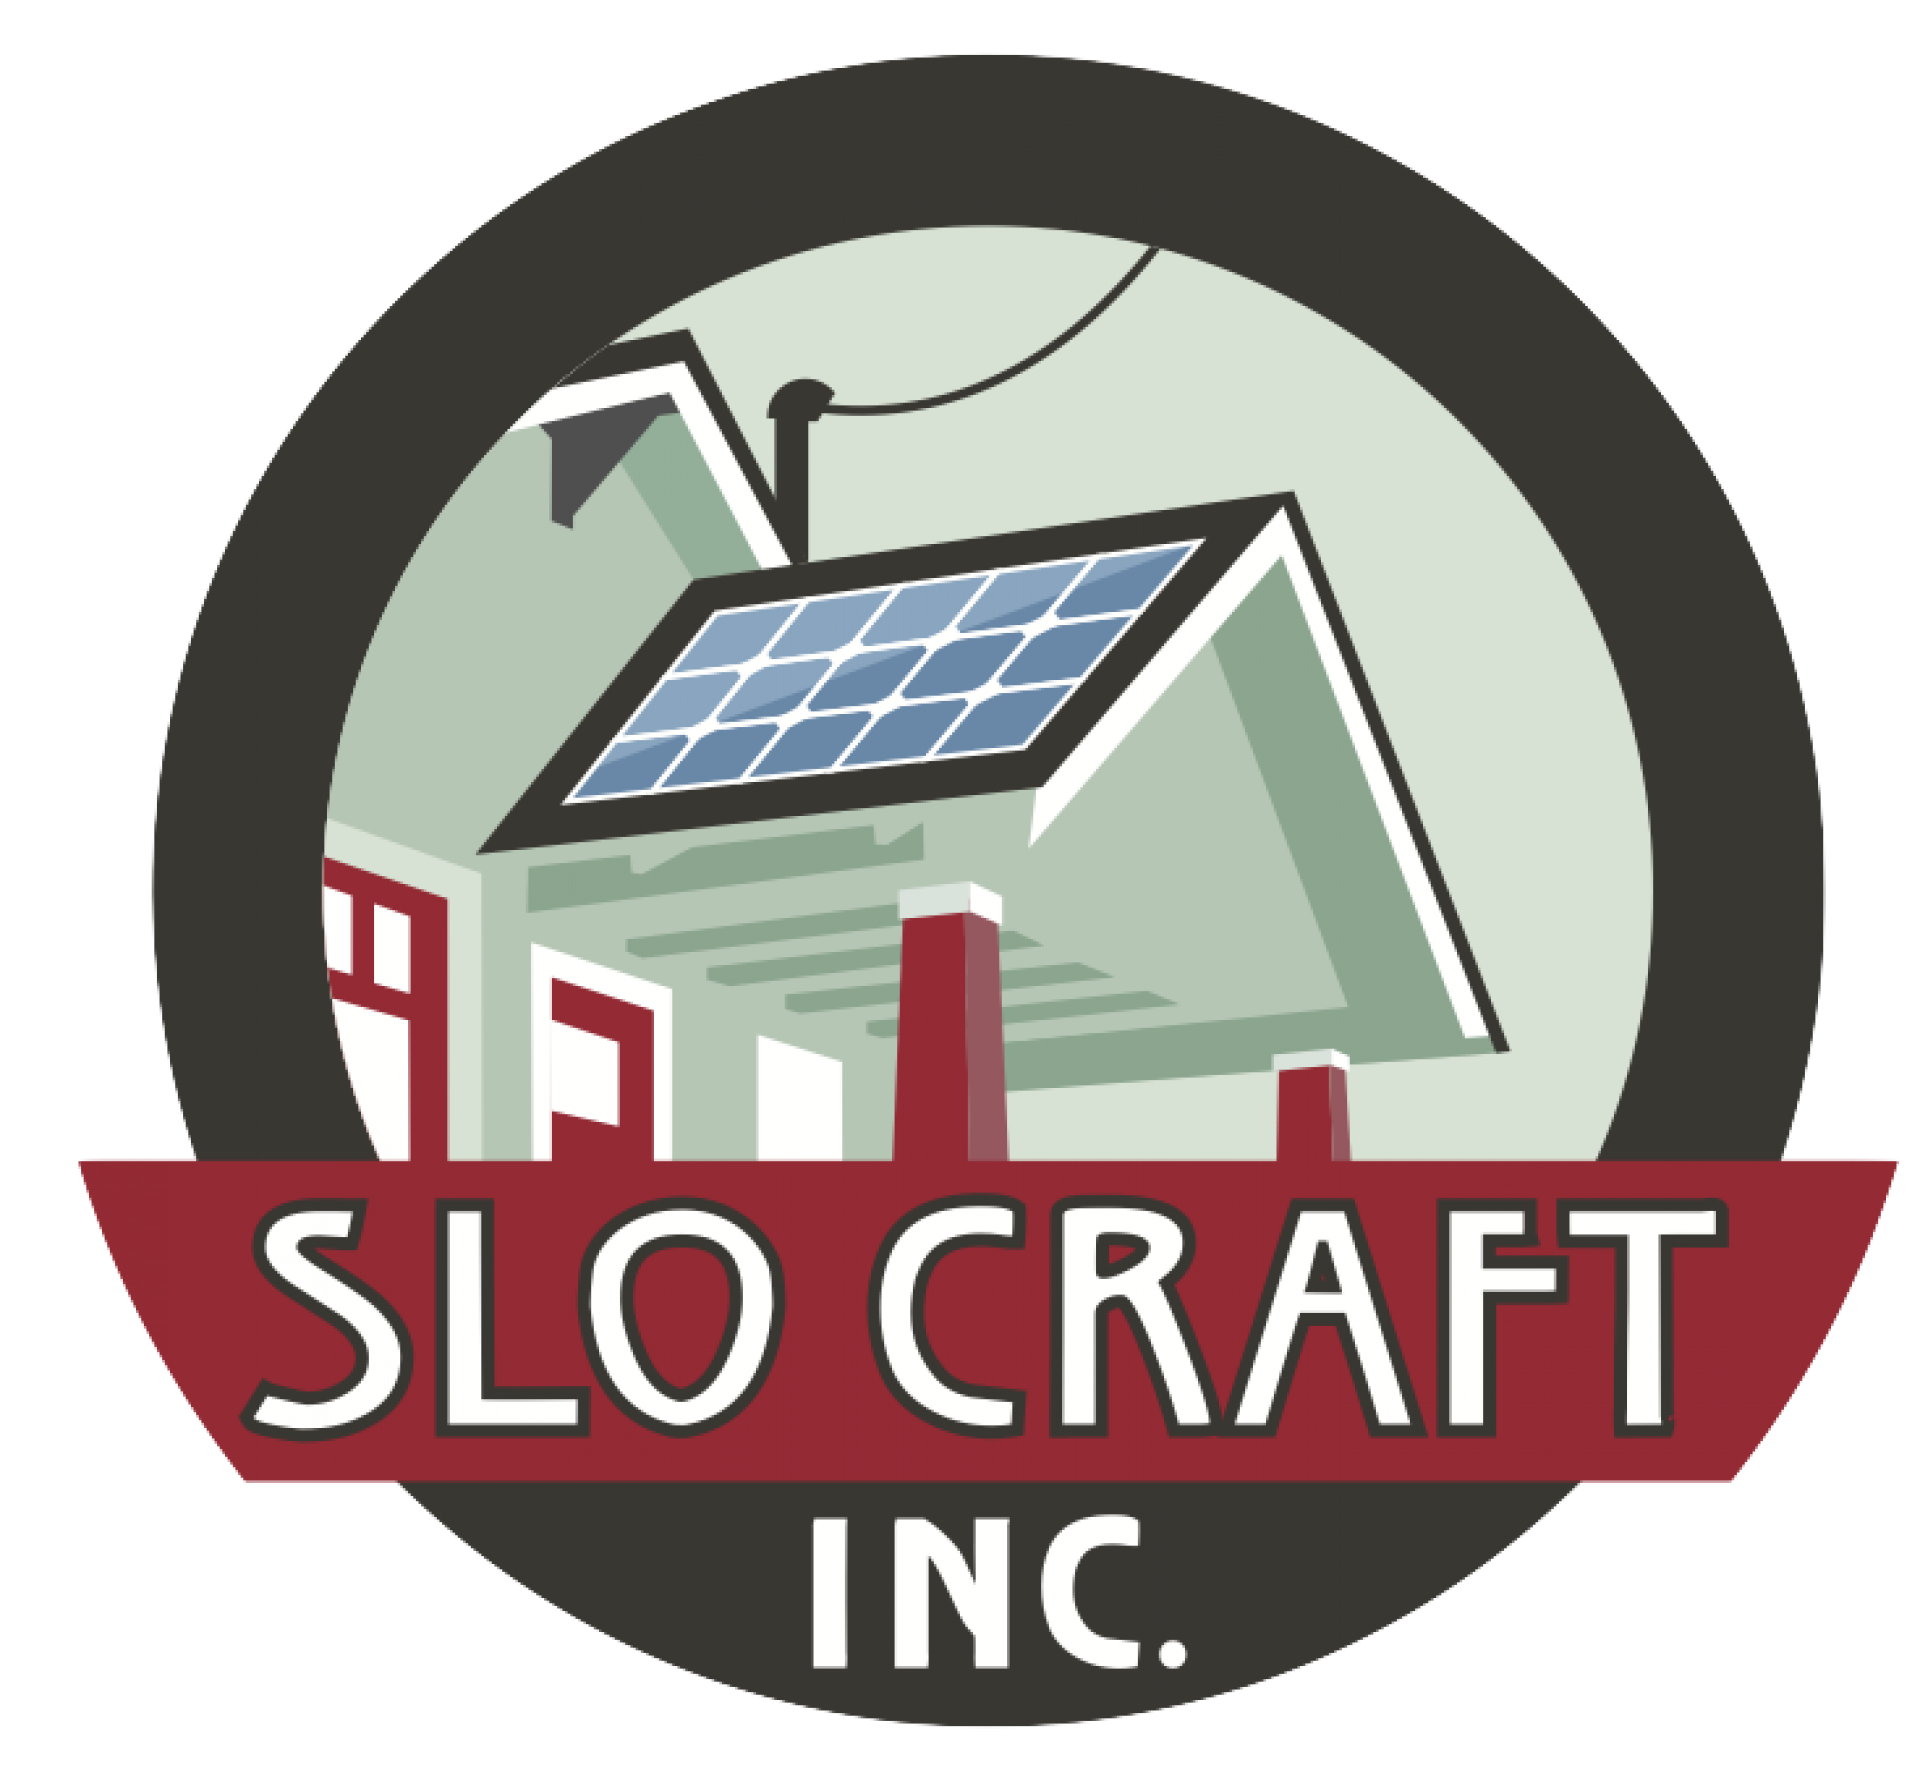 SLO Craft Inc. company logo